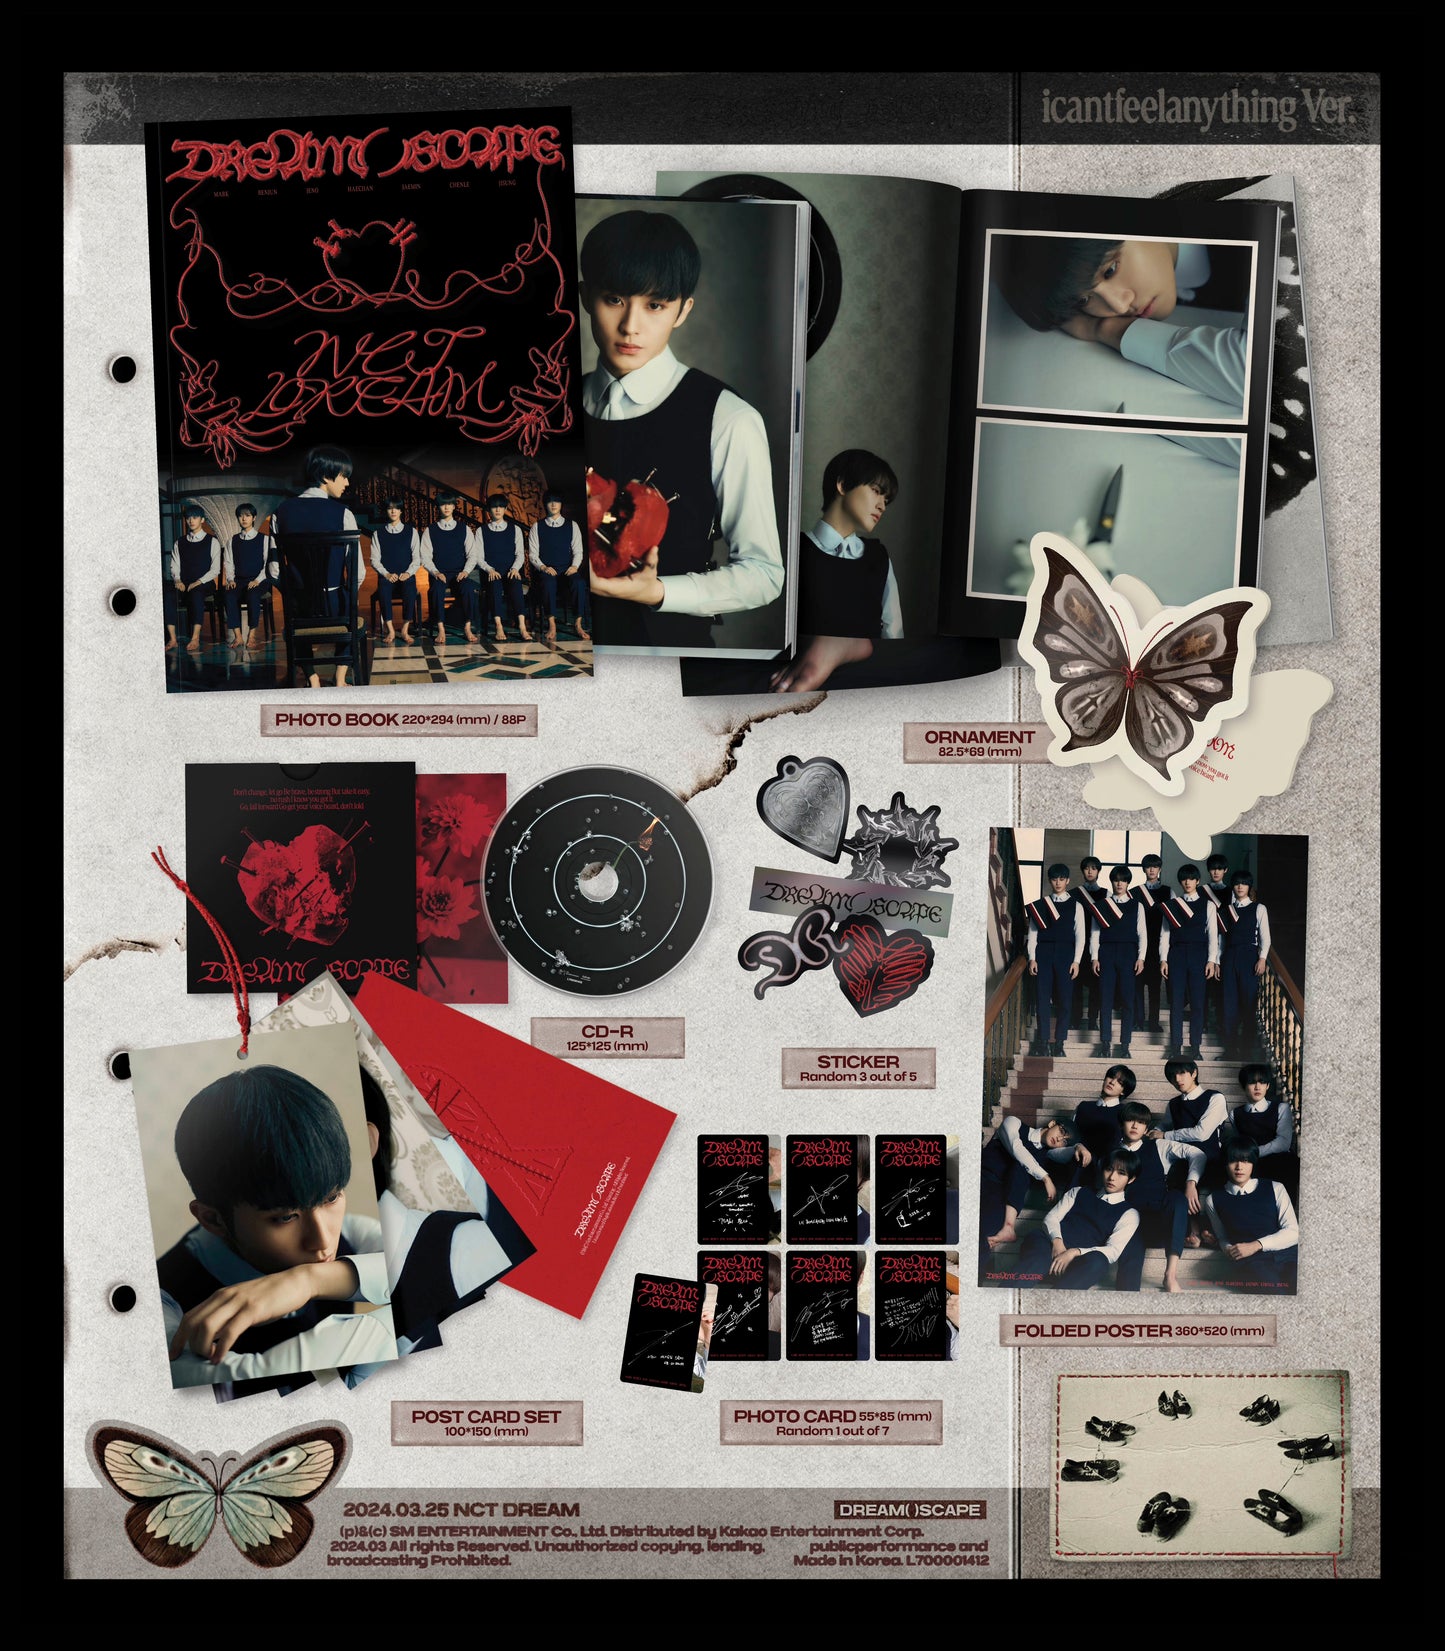 NCT DREAM - 5TH MINI ALBUM [DREAM()SCAPE] (Photobook Ver.)